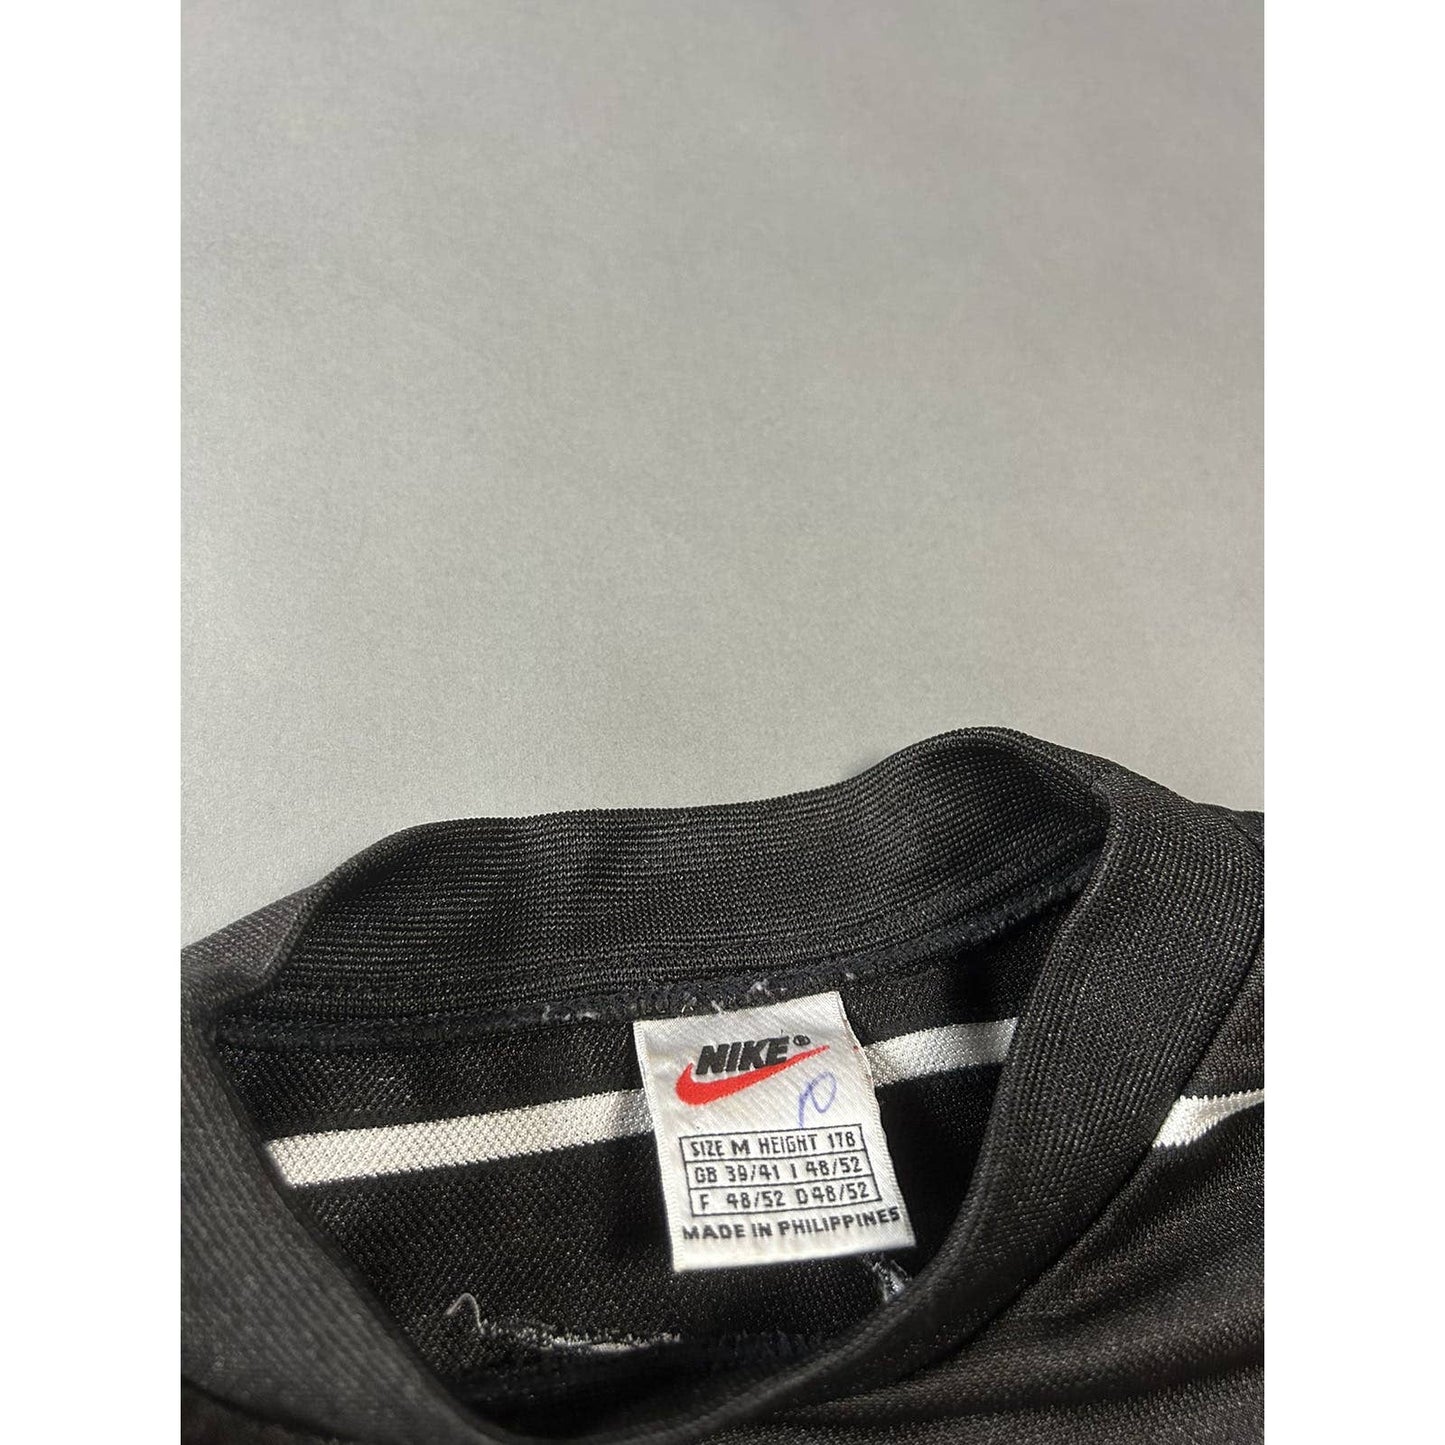 Nike big swoosh striped t-shirt vintage 90s black